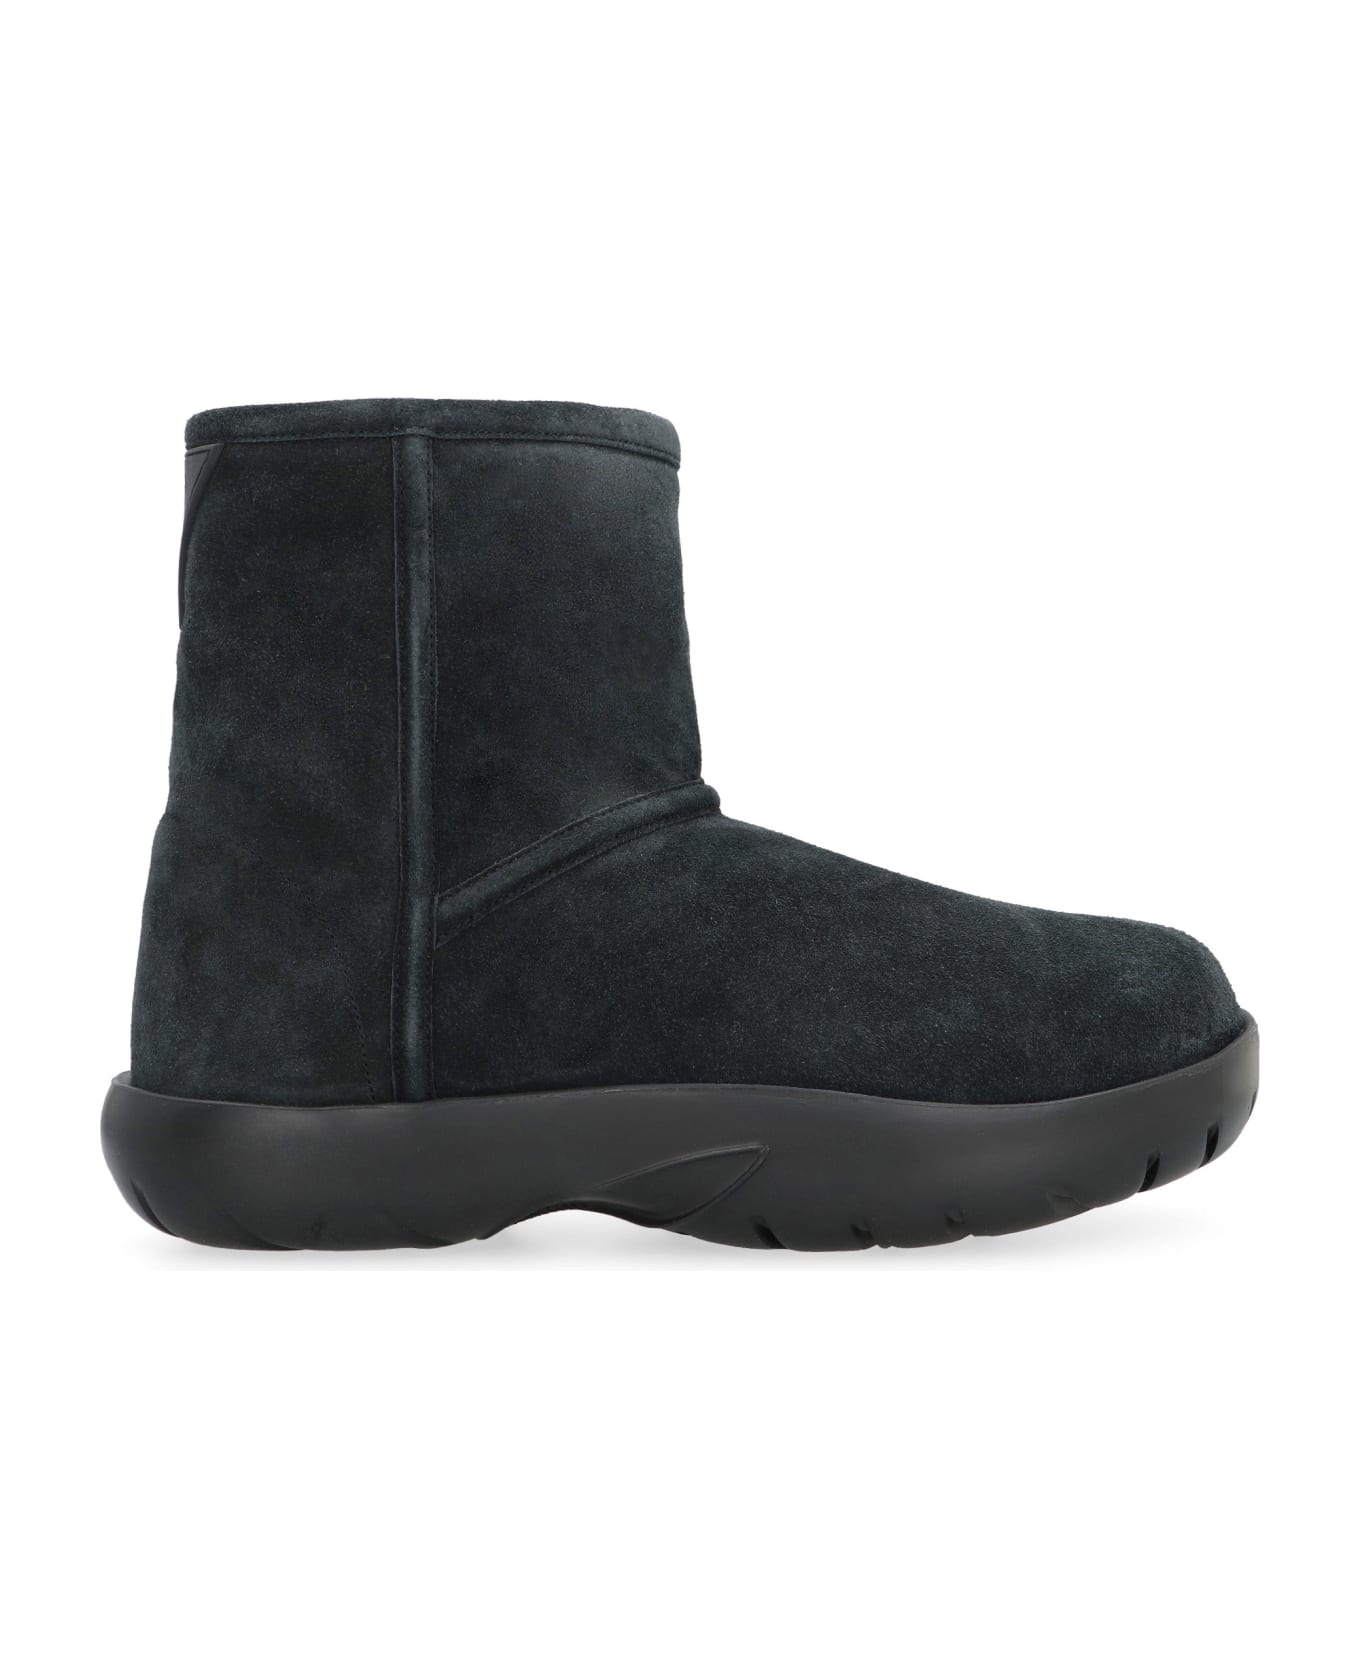 Bottega Veneta Snap Ankle Boots - black